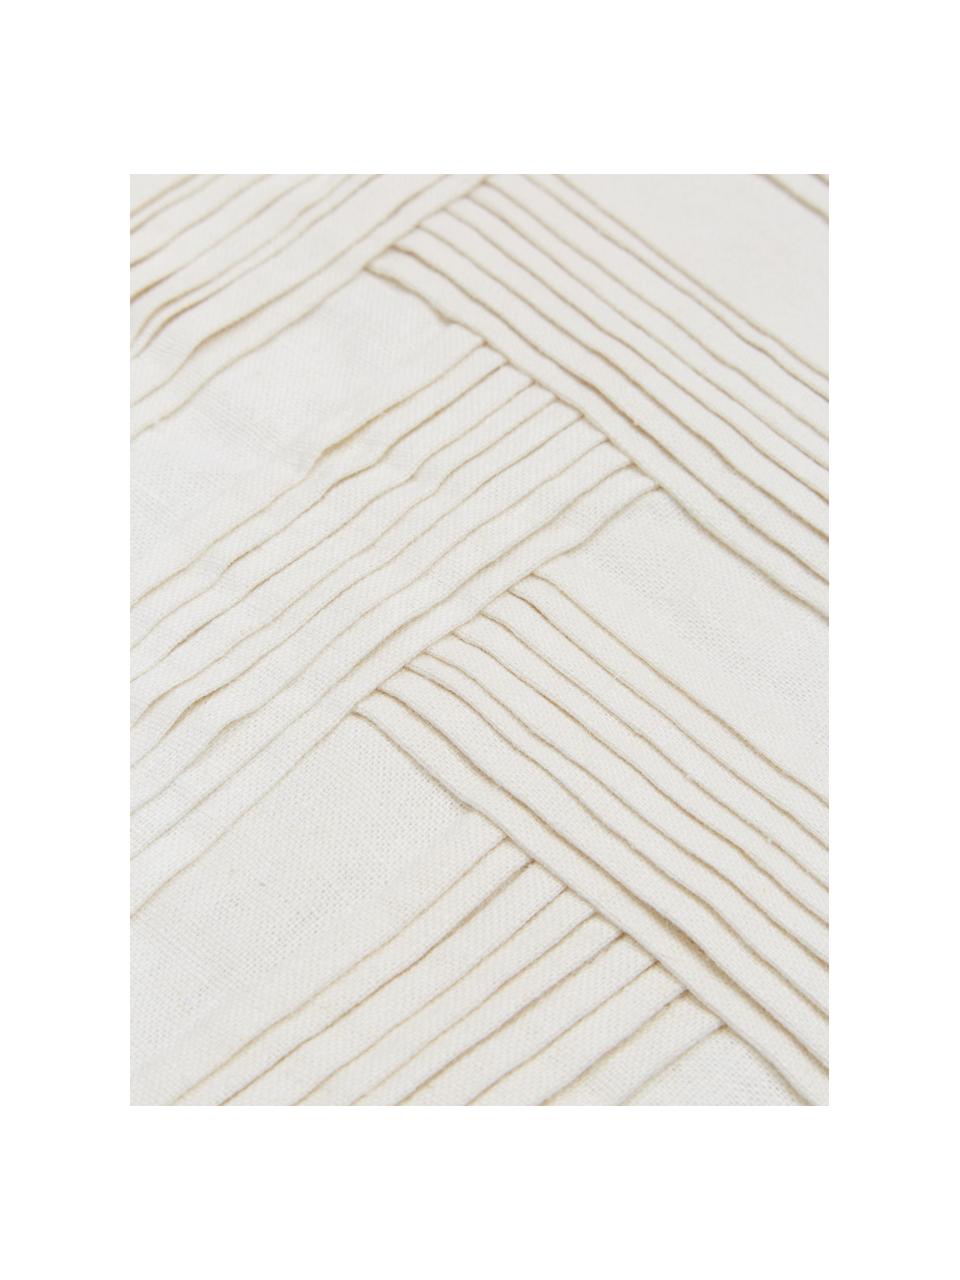 Kussenhoes Maya in wit met structuurpatroon, 51% linnen, 49% katoen, Crèmewit, B 30 x L 50 cm